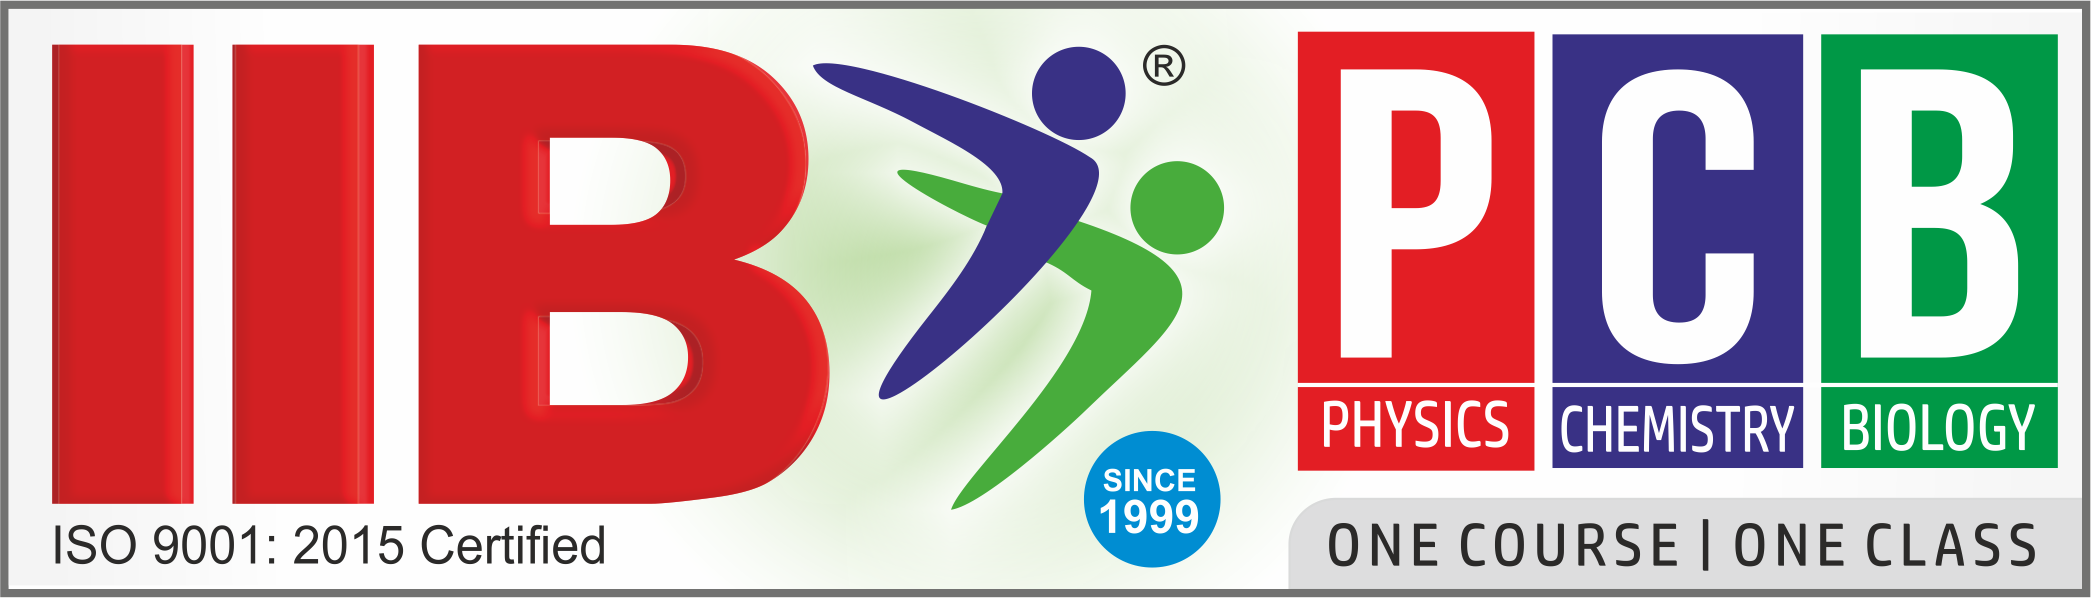 Best Coaching Institute for Medical IIB Logo